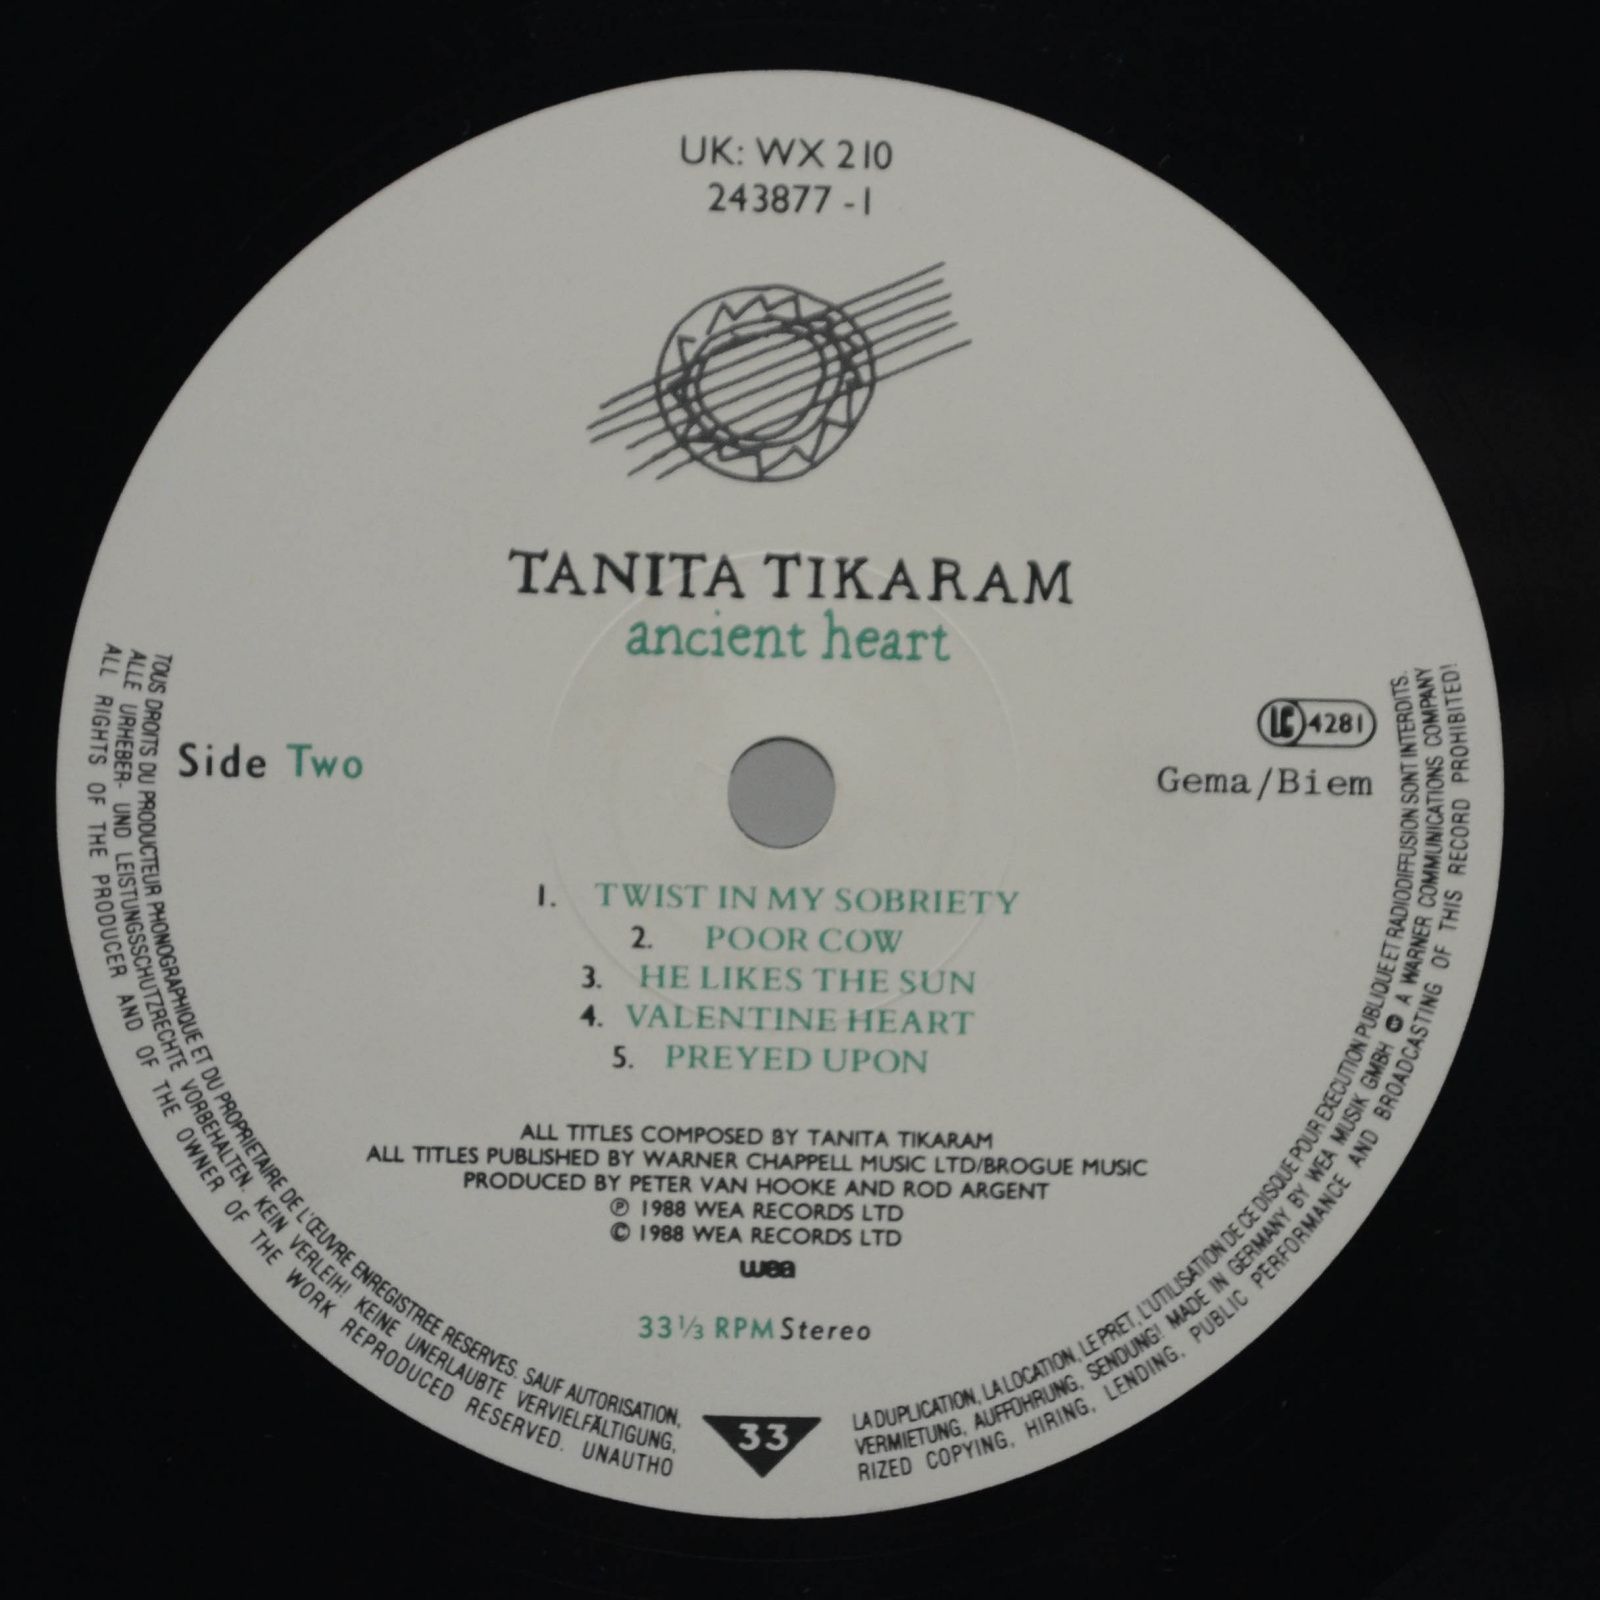 Tanita Tikaram — Ancient Heart, 1988